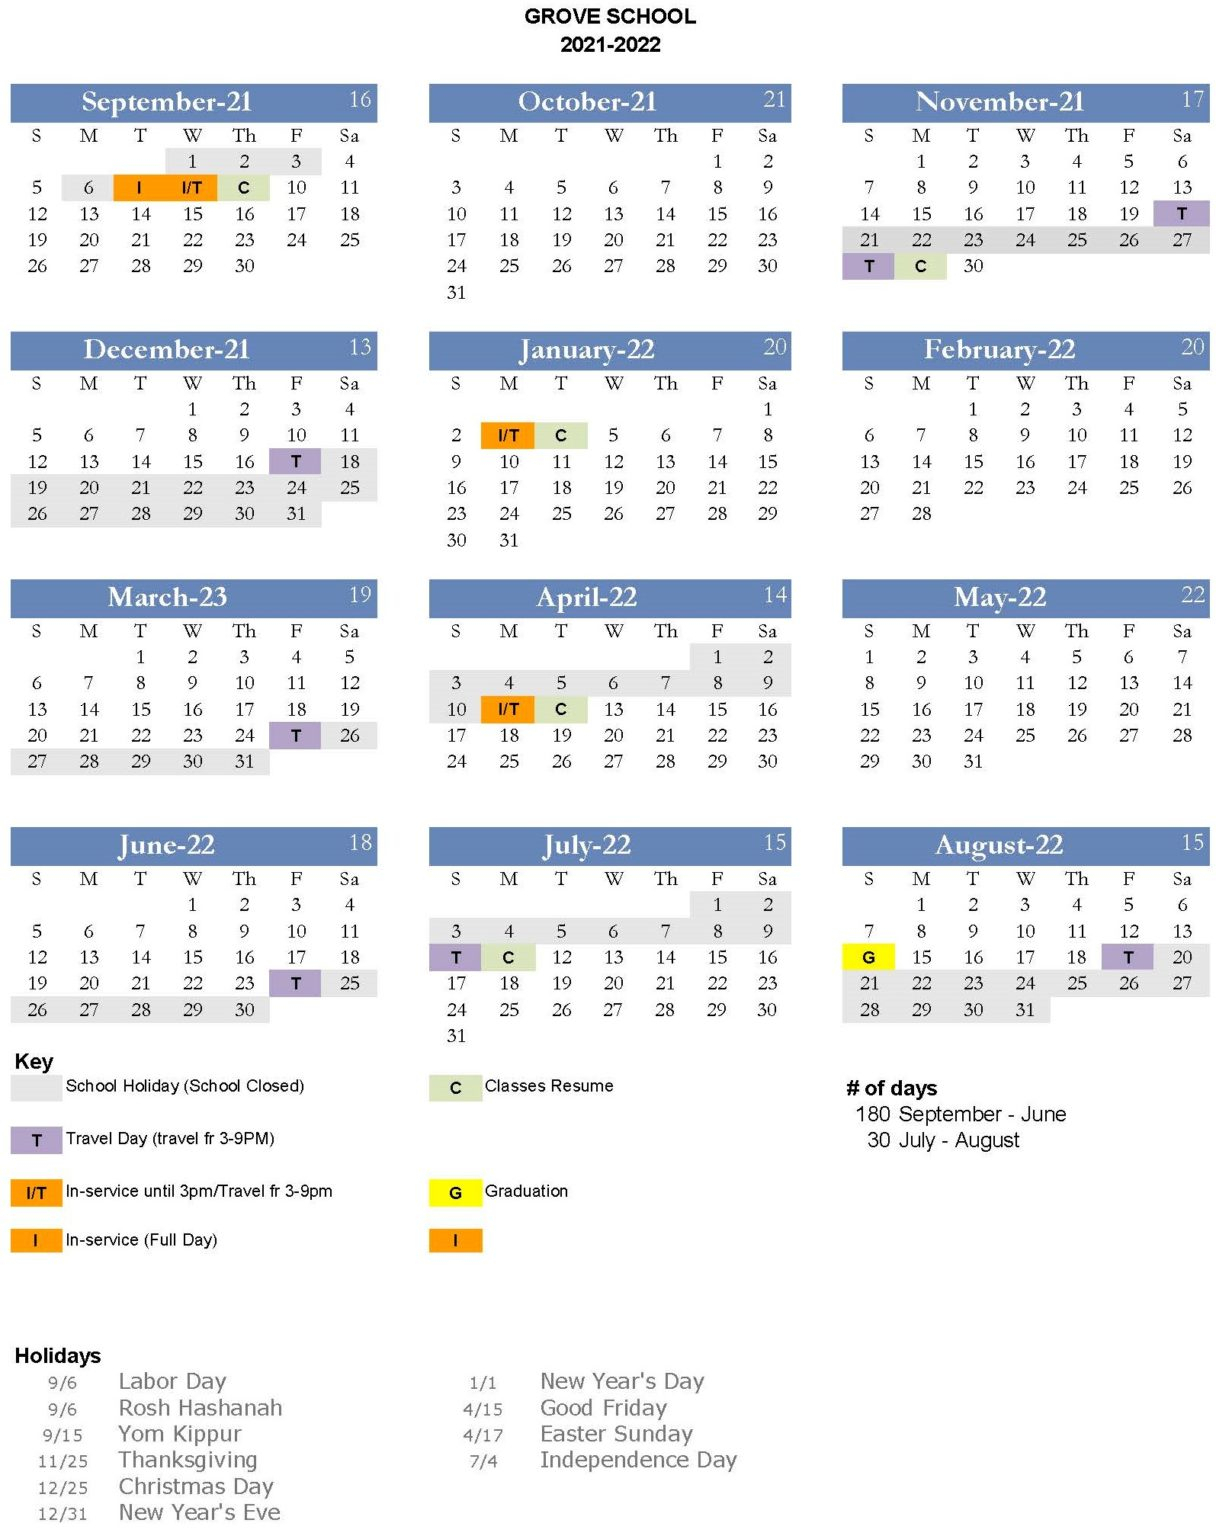 2021-2022 Calendar - Grove School